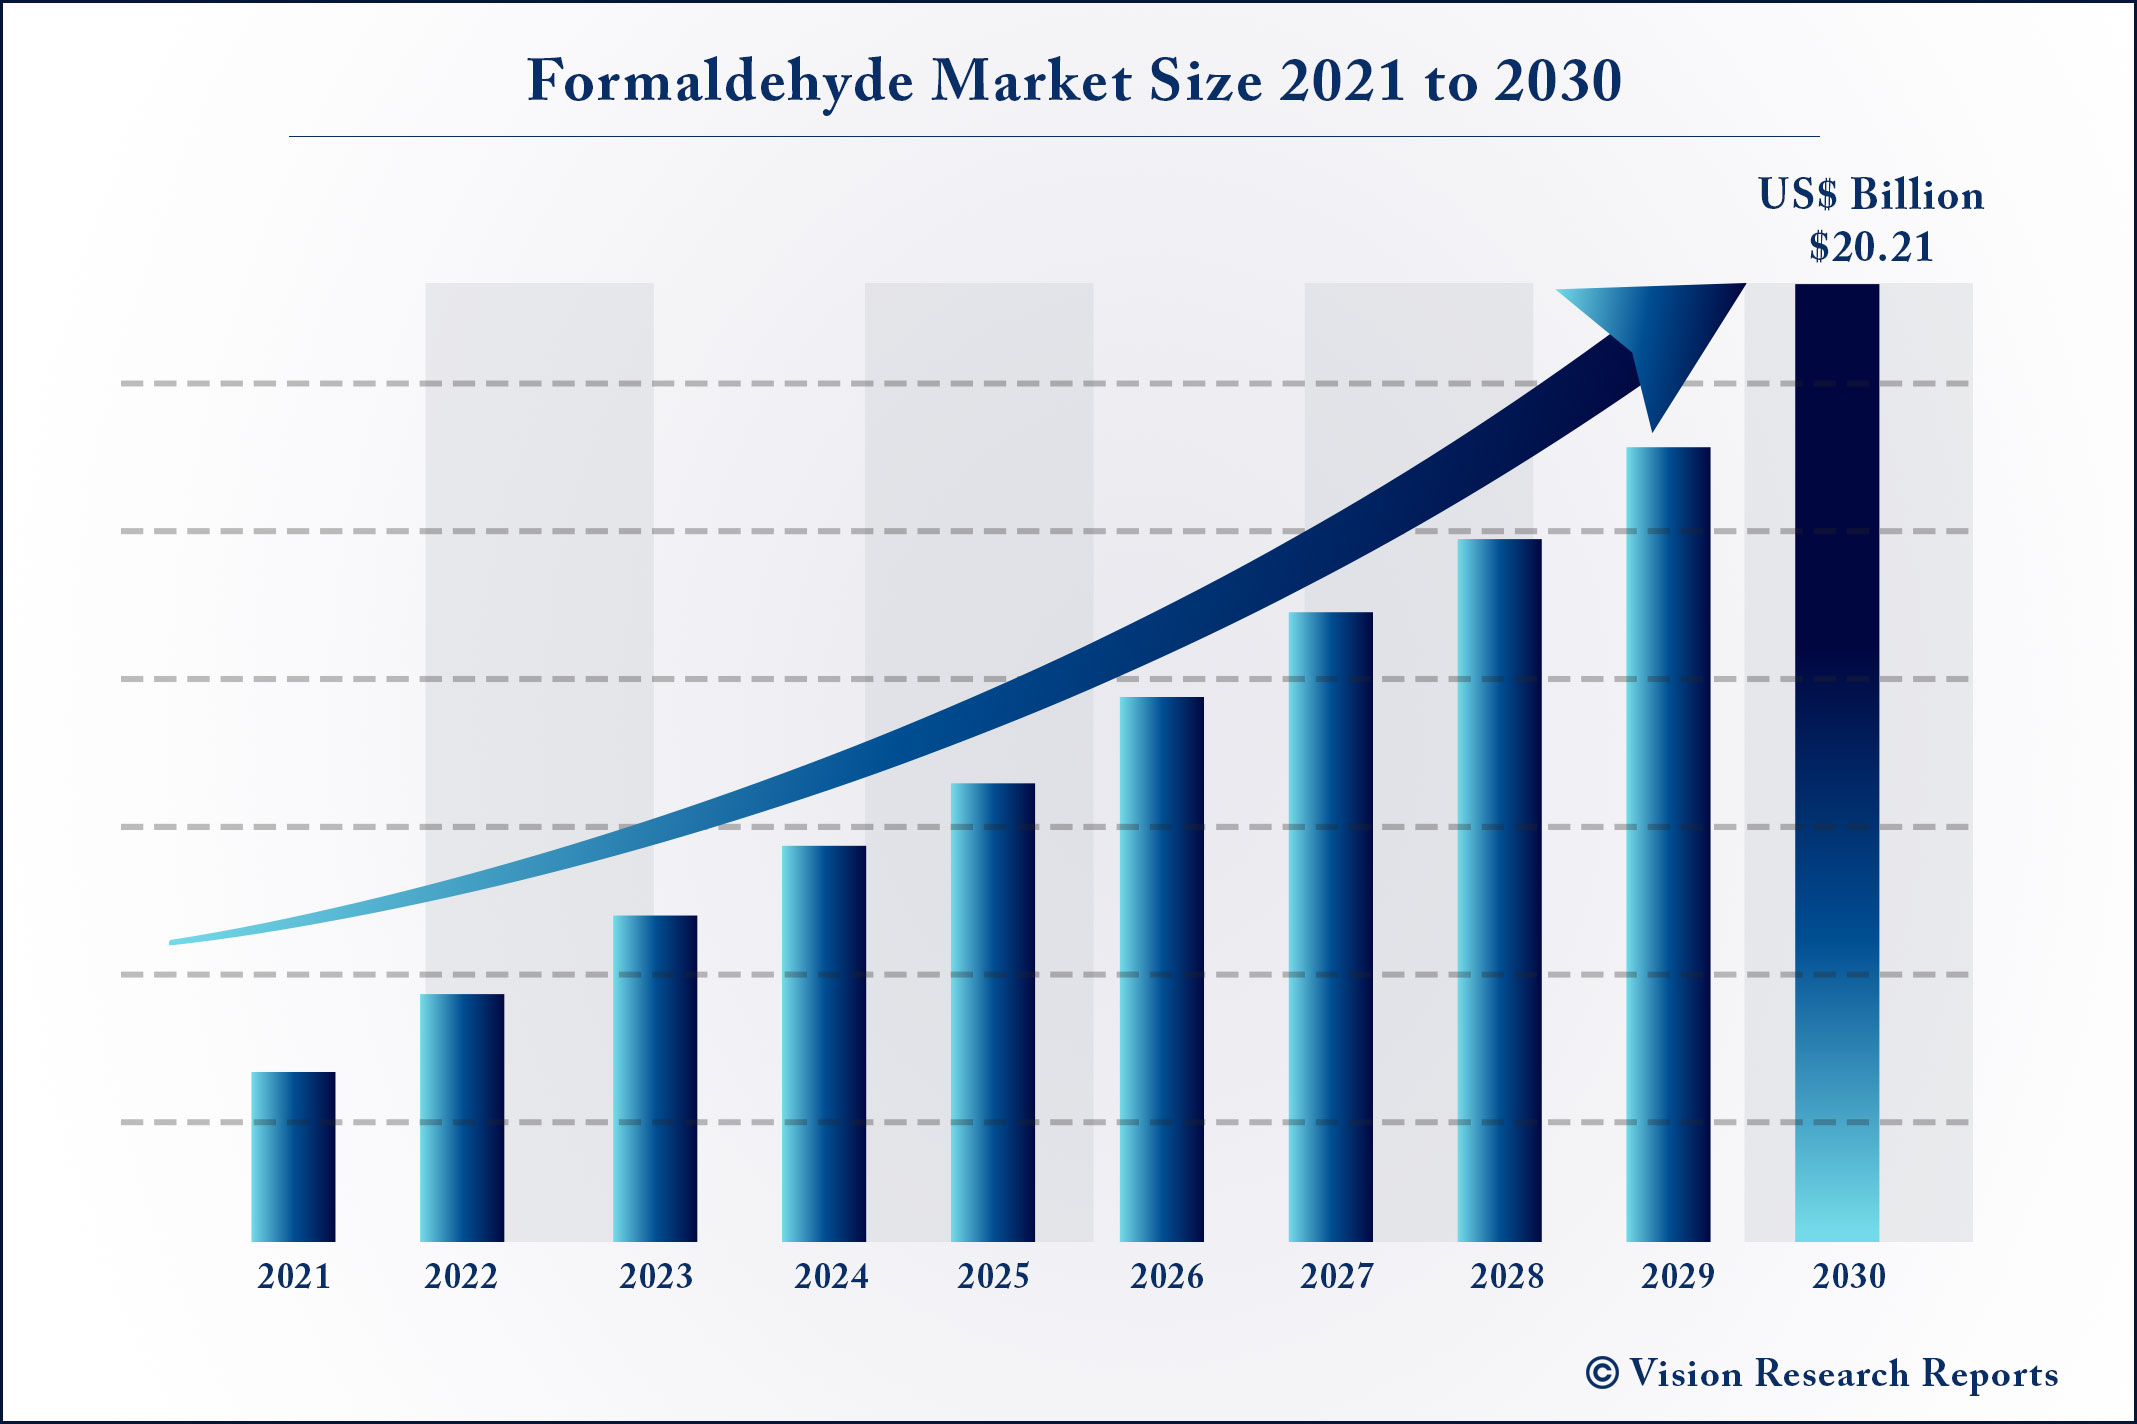 Formaldehyde Market Size 2021 to 2030